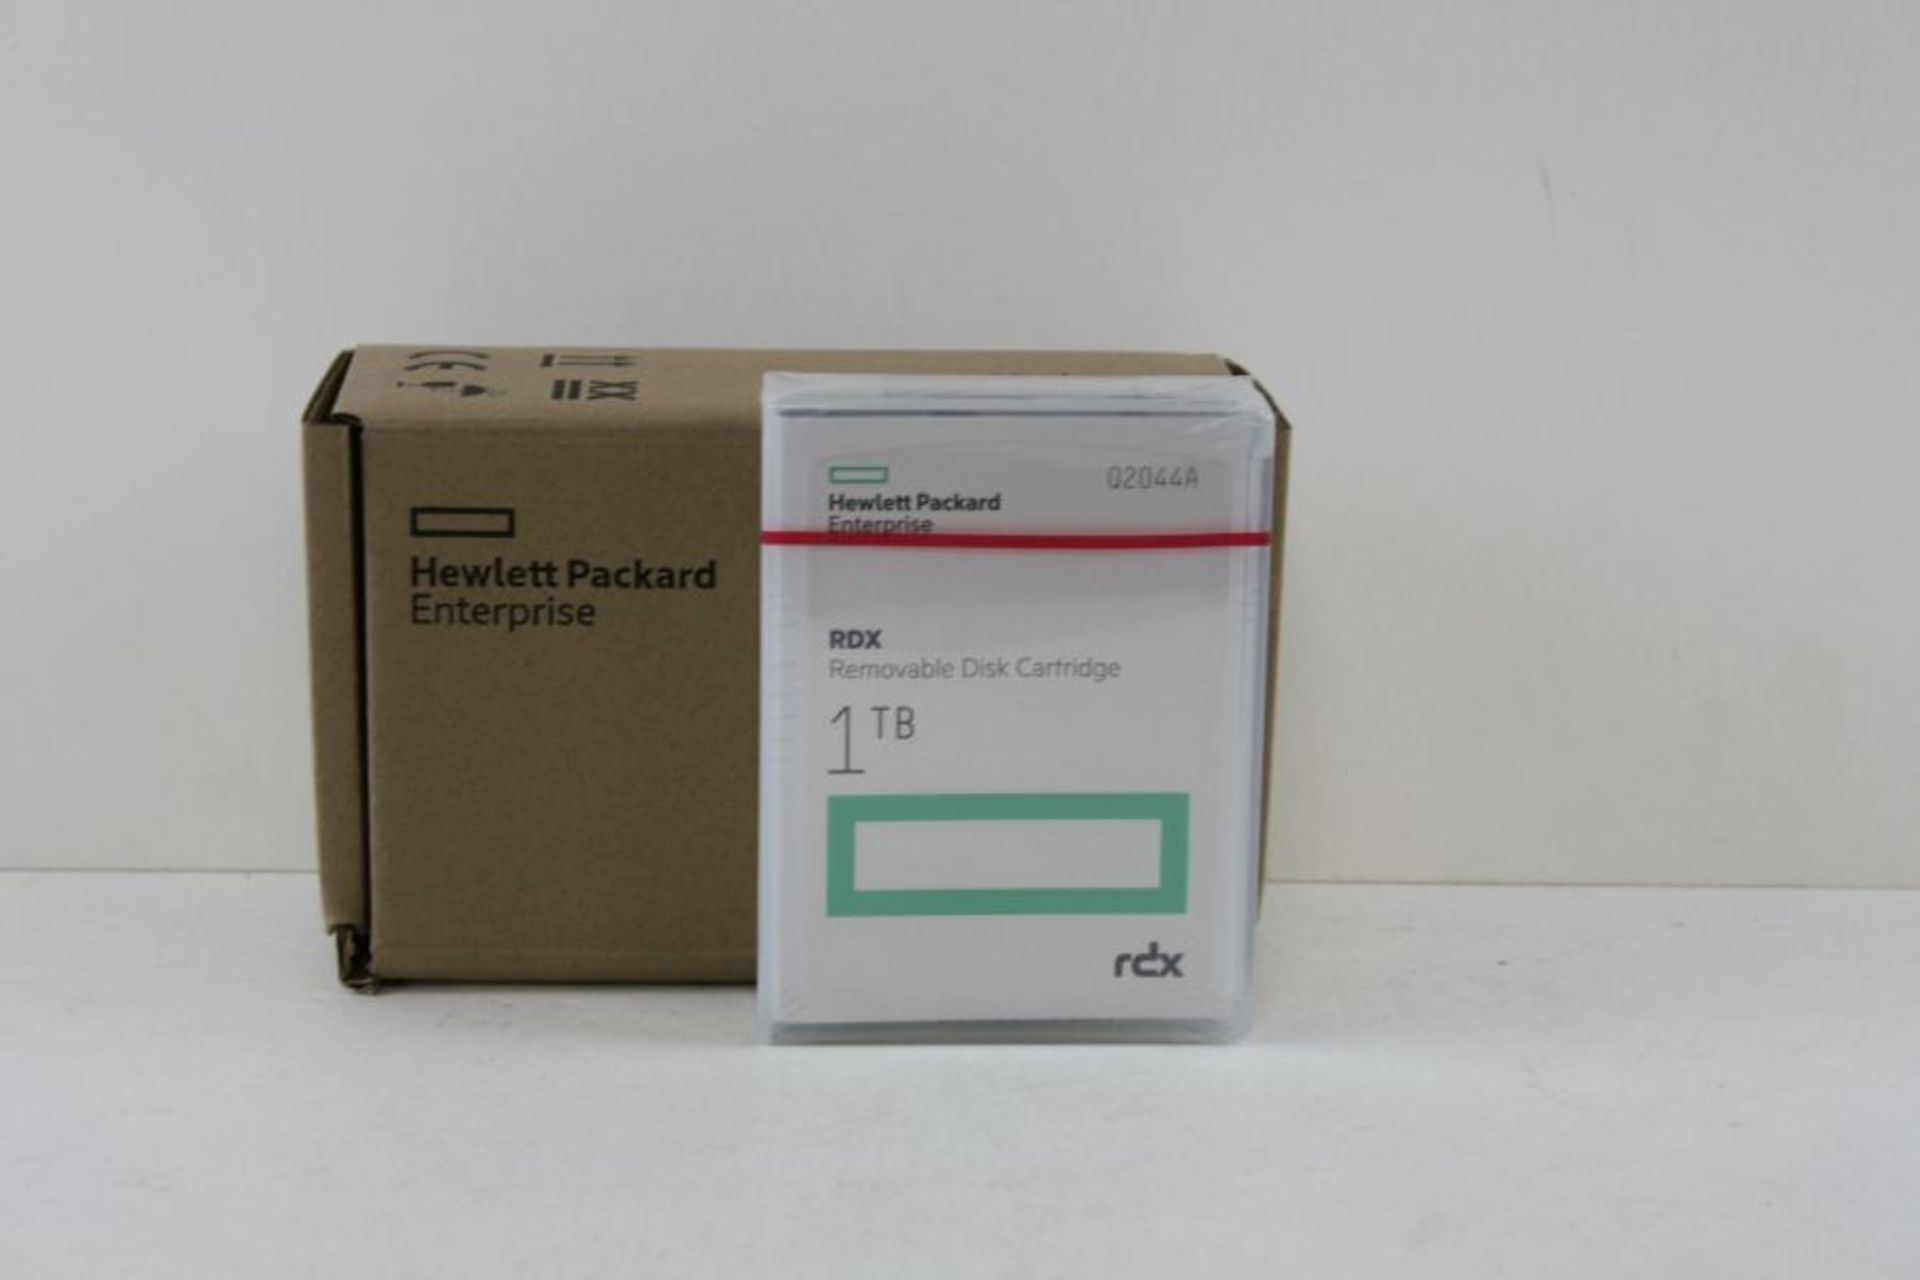 Hewlett Packard Enterprise RDX Removable Disc Cartridge, 1TB, Q2044A